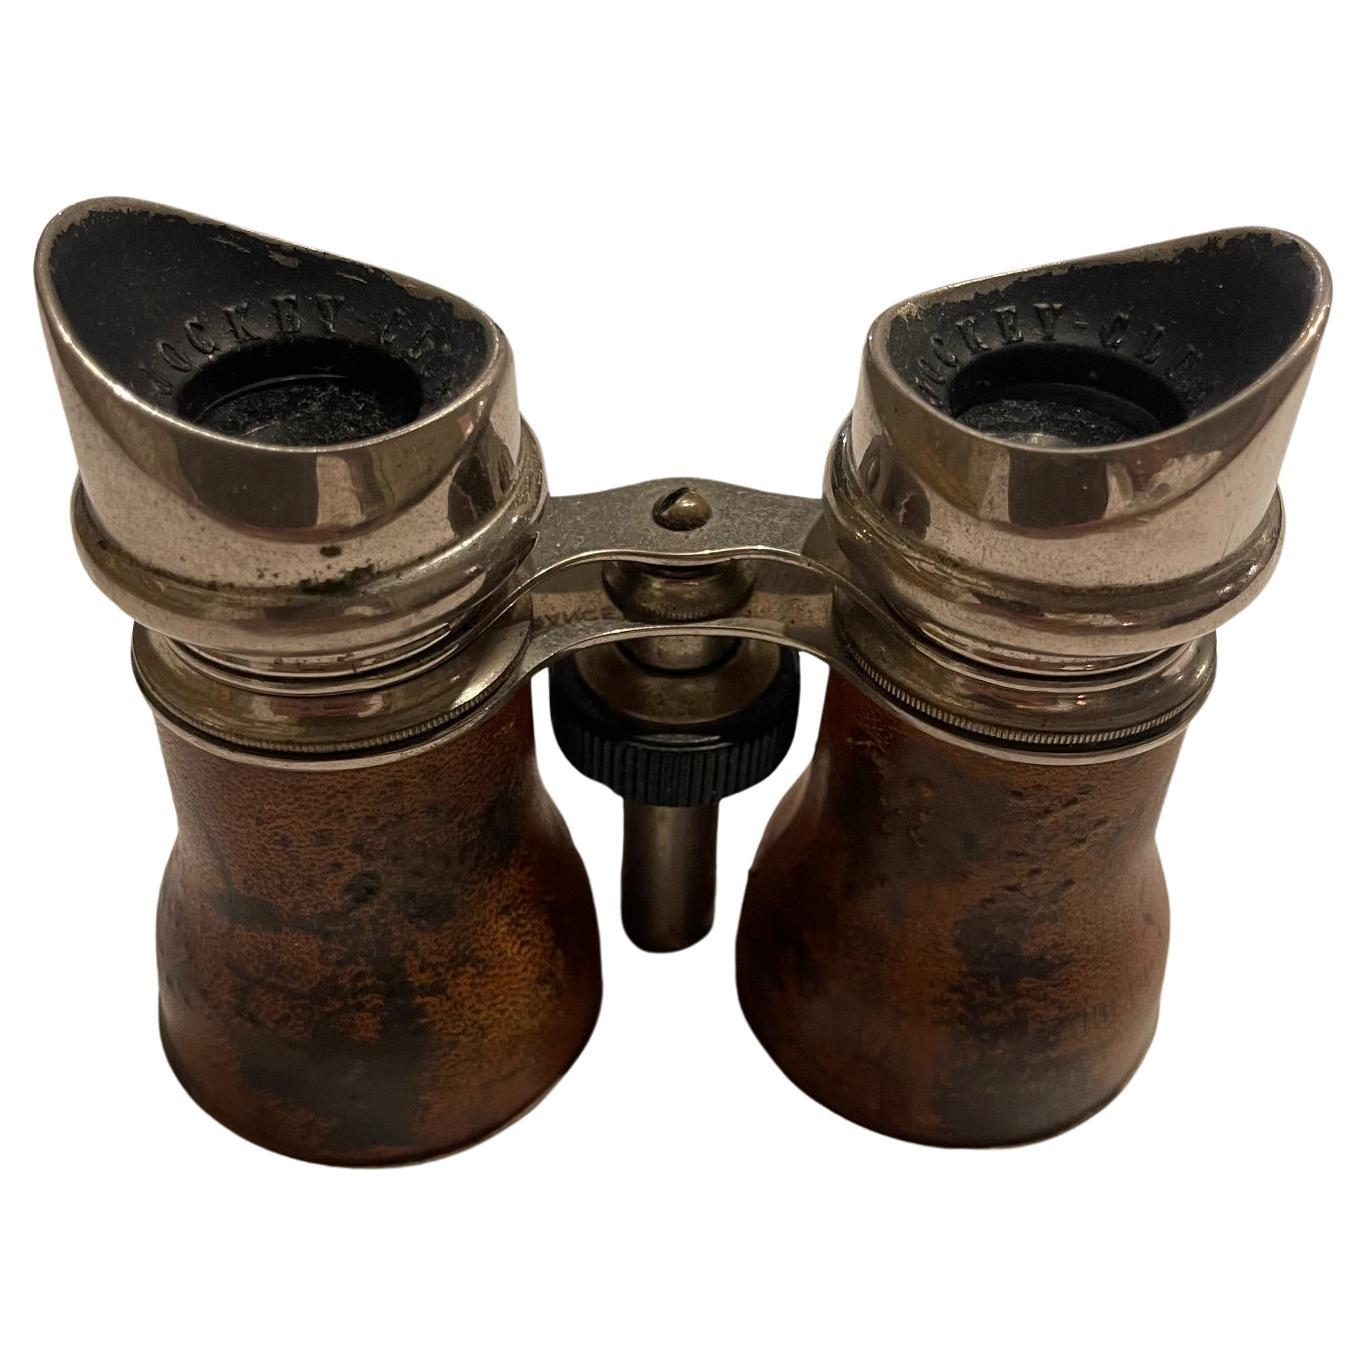 Leather Wrapped "Paris Jockey Club" French Binoculars, Late 19th Century